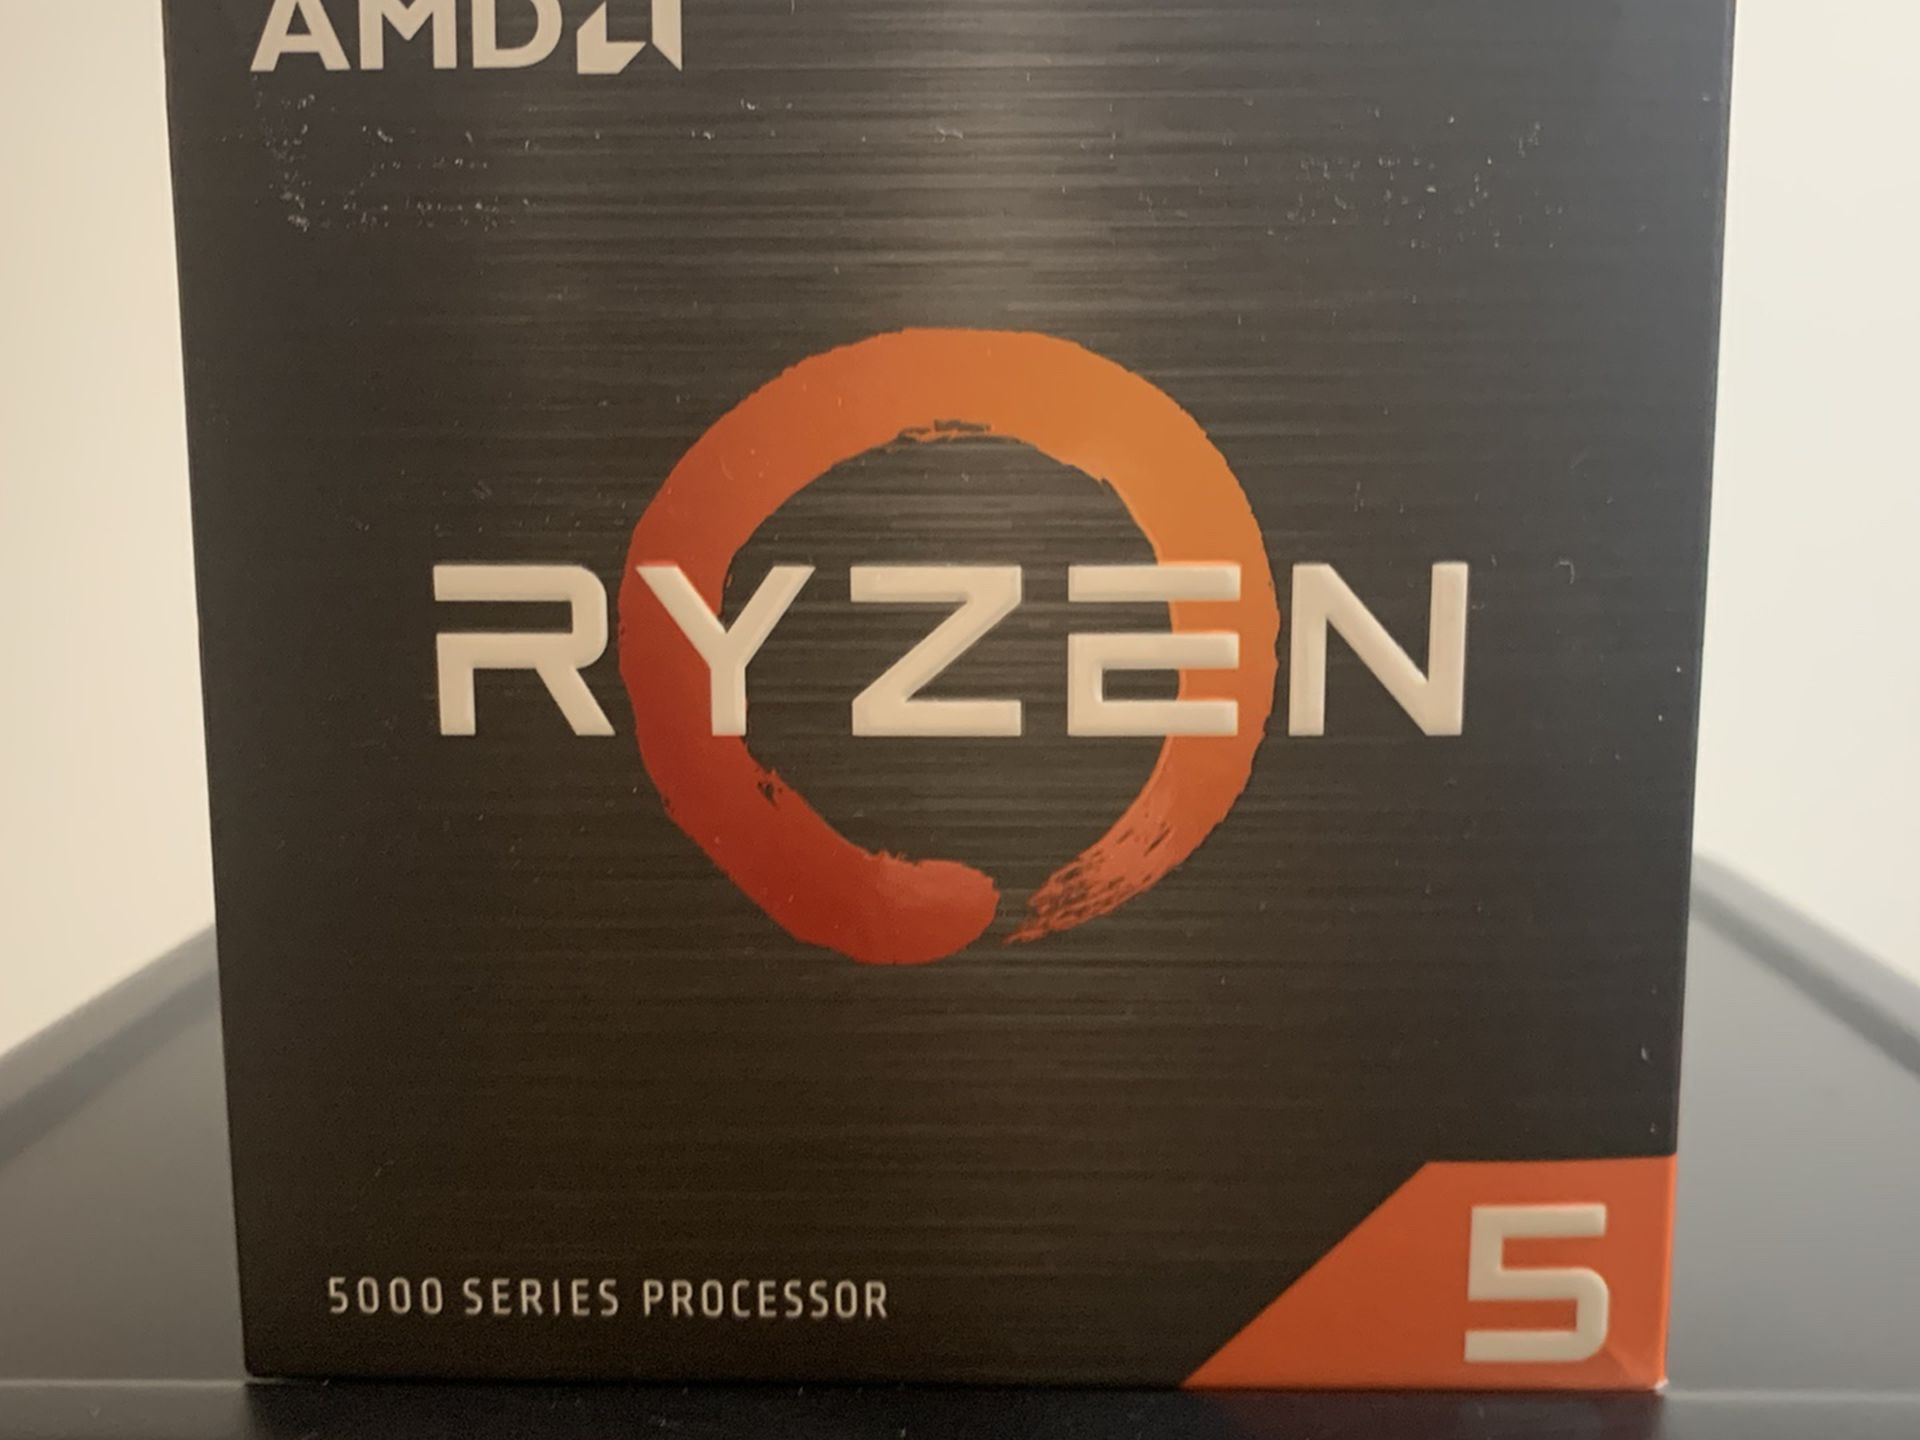 AMD Ryzen 5 5600X Desktop Processor (4.6GHz, 6 Cores, Socket AM4) with Wraith Cooler